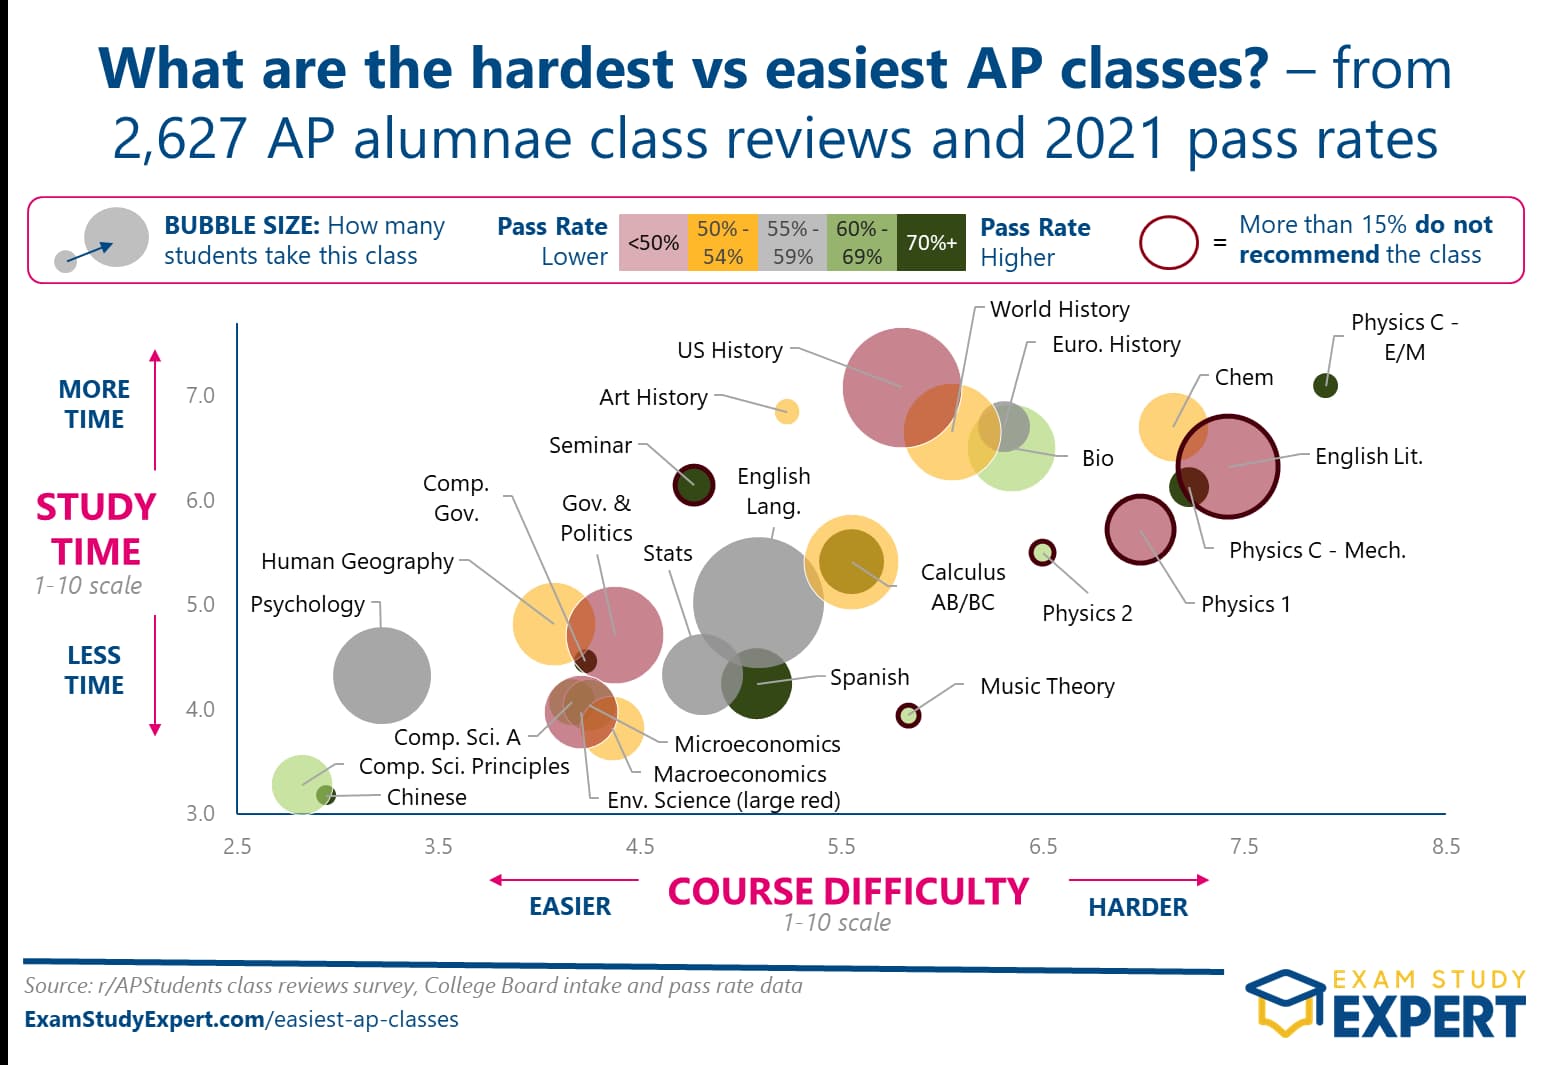 Easiest vs hardest AP classes chart